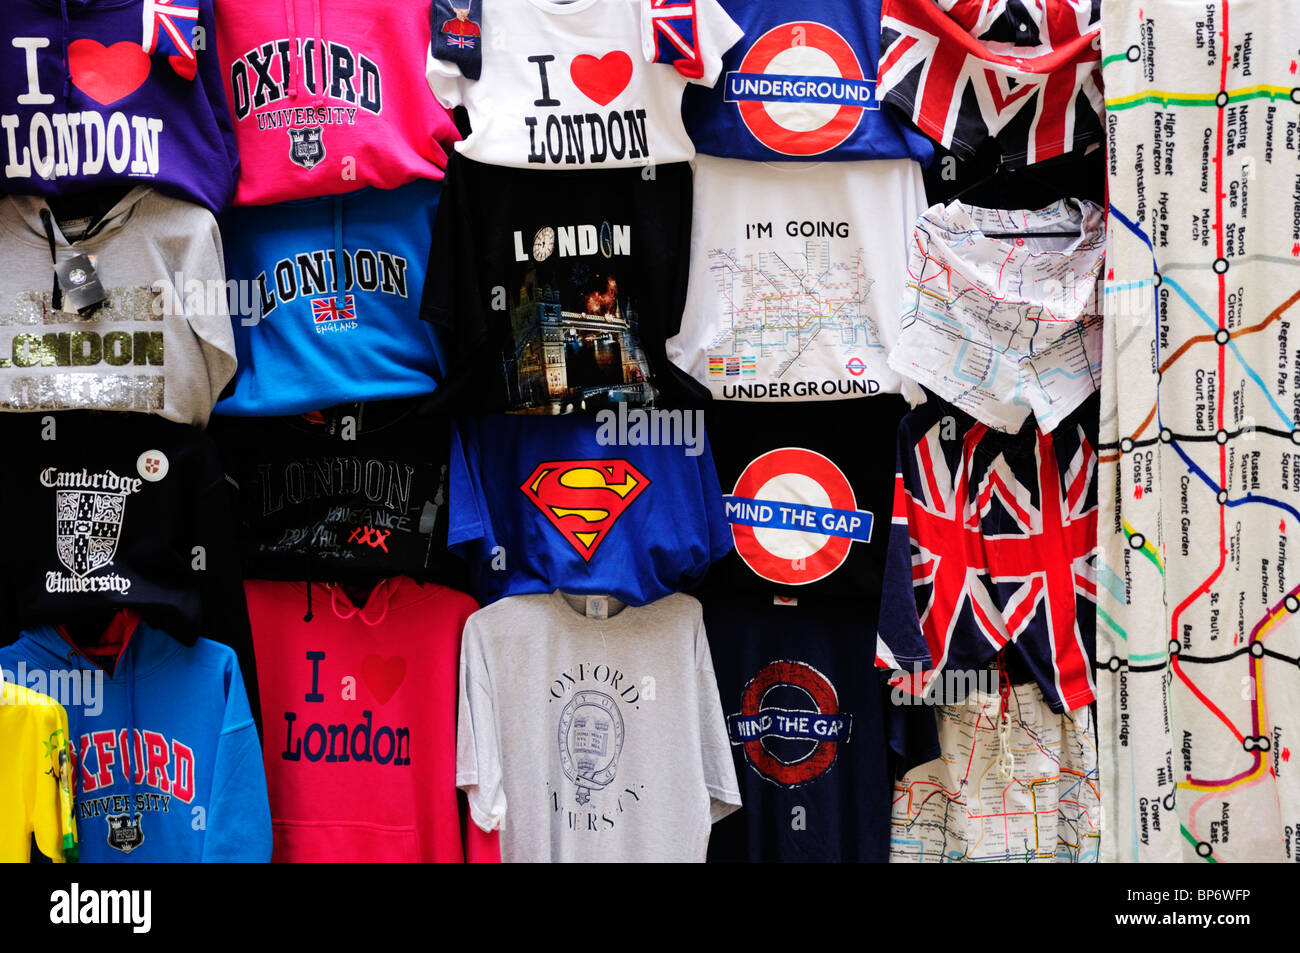 London, Oxford and Cambridge souvenirs for sale, London, England, UK ...